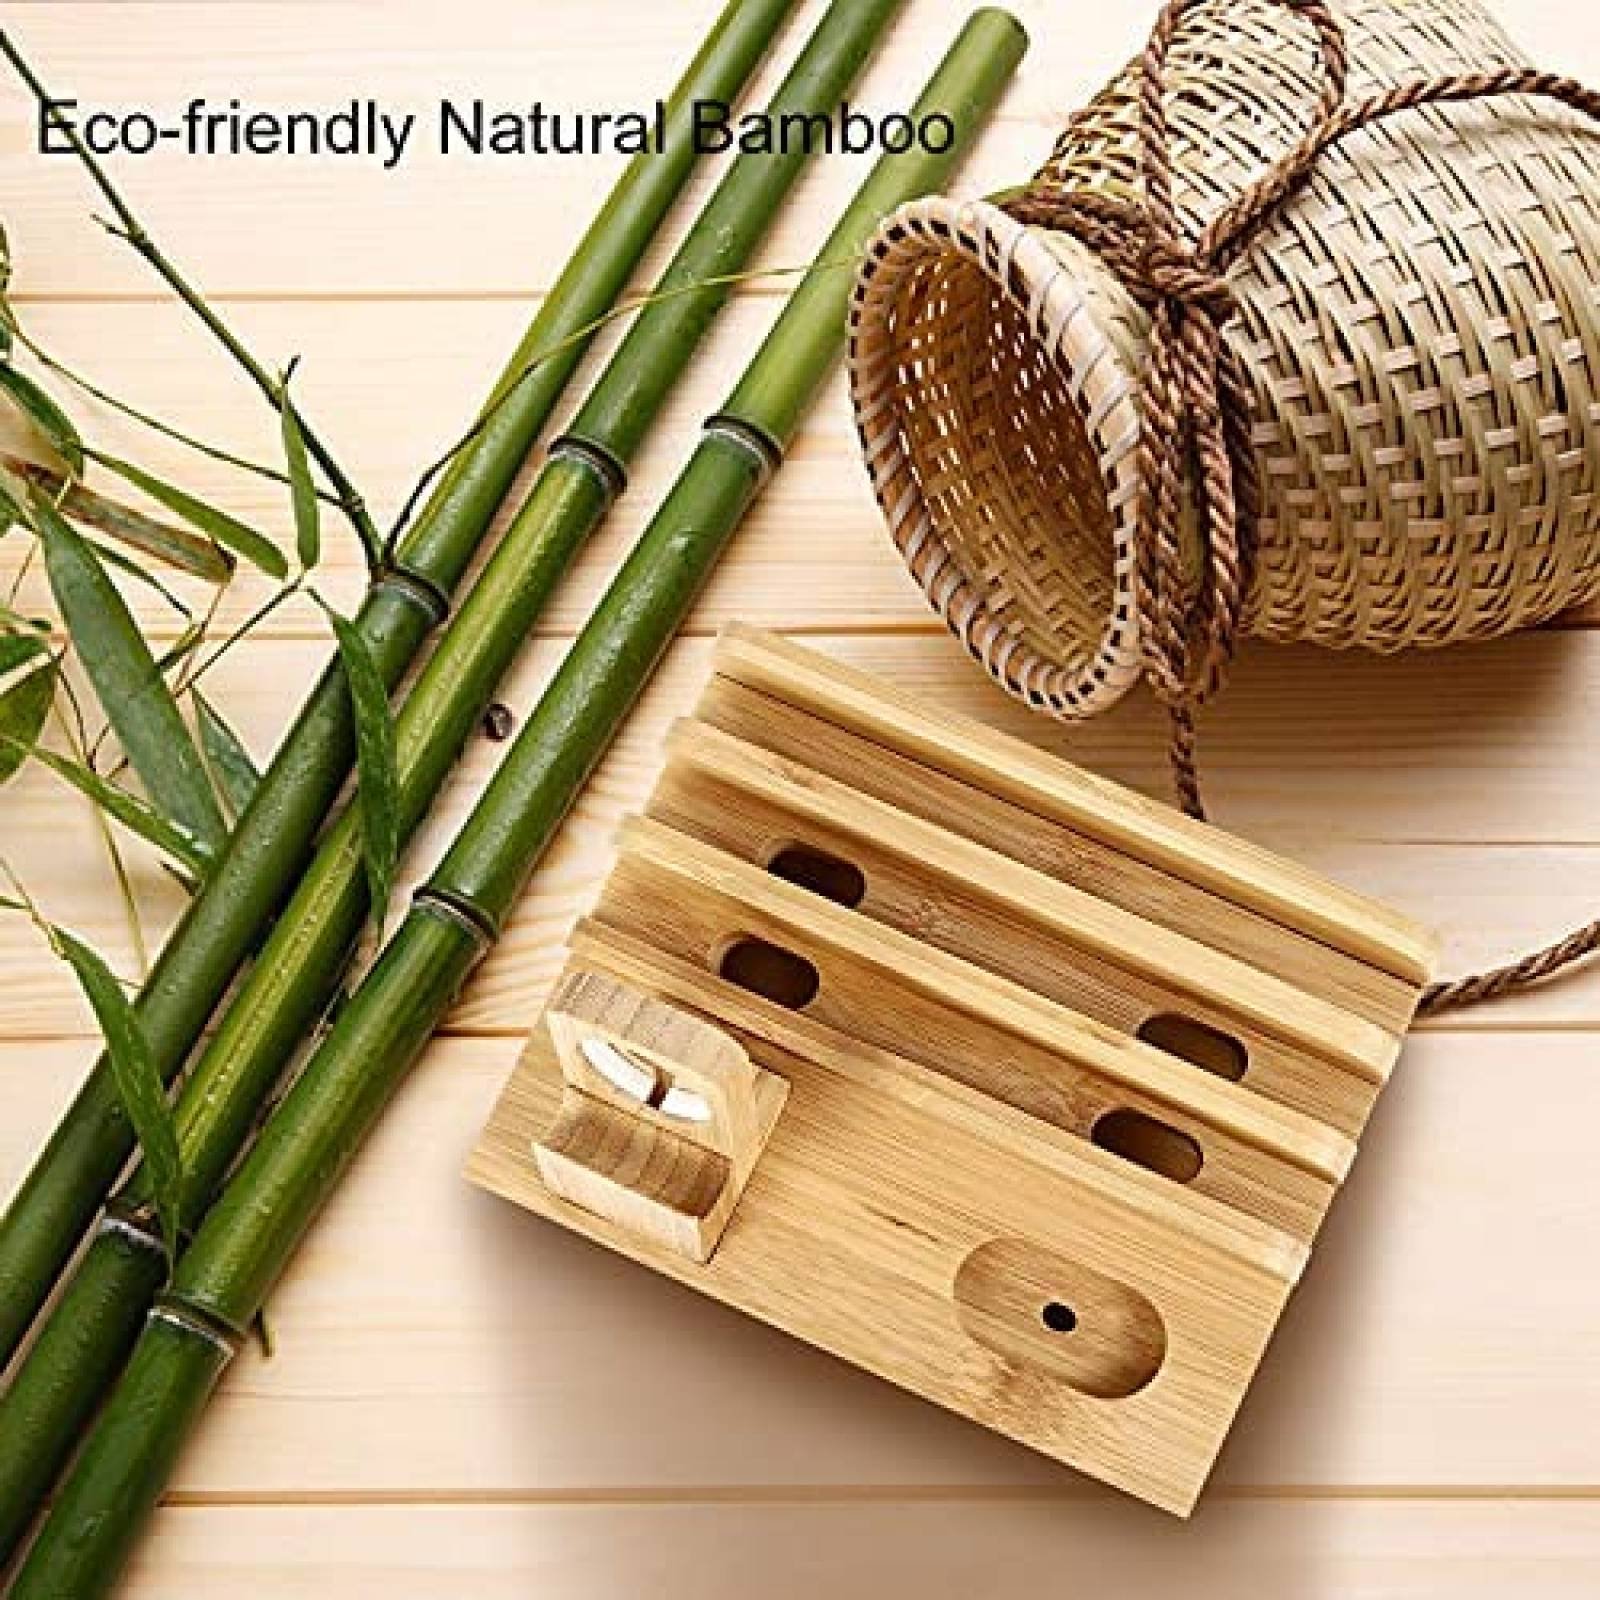 Organizador de escritorio de bambú con estación de carga para el móvil  ideal para un regalo